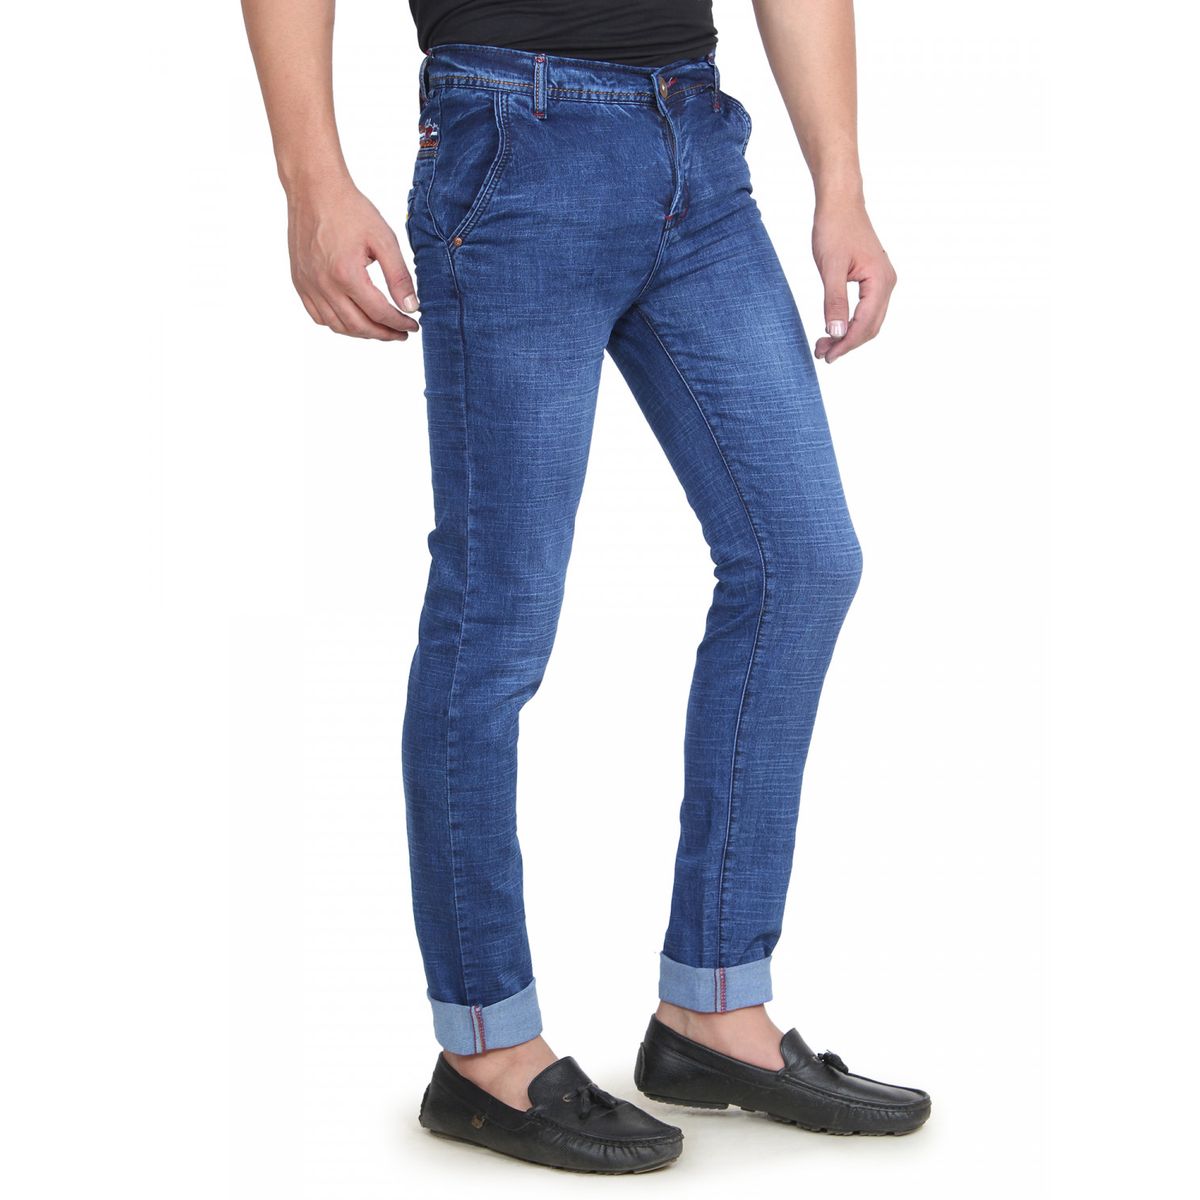 Buy Indo Trendz Slim Mens Blue Jeans at Lowest Price ...